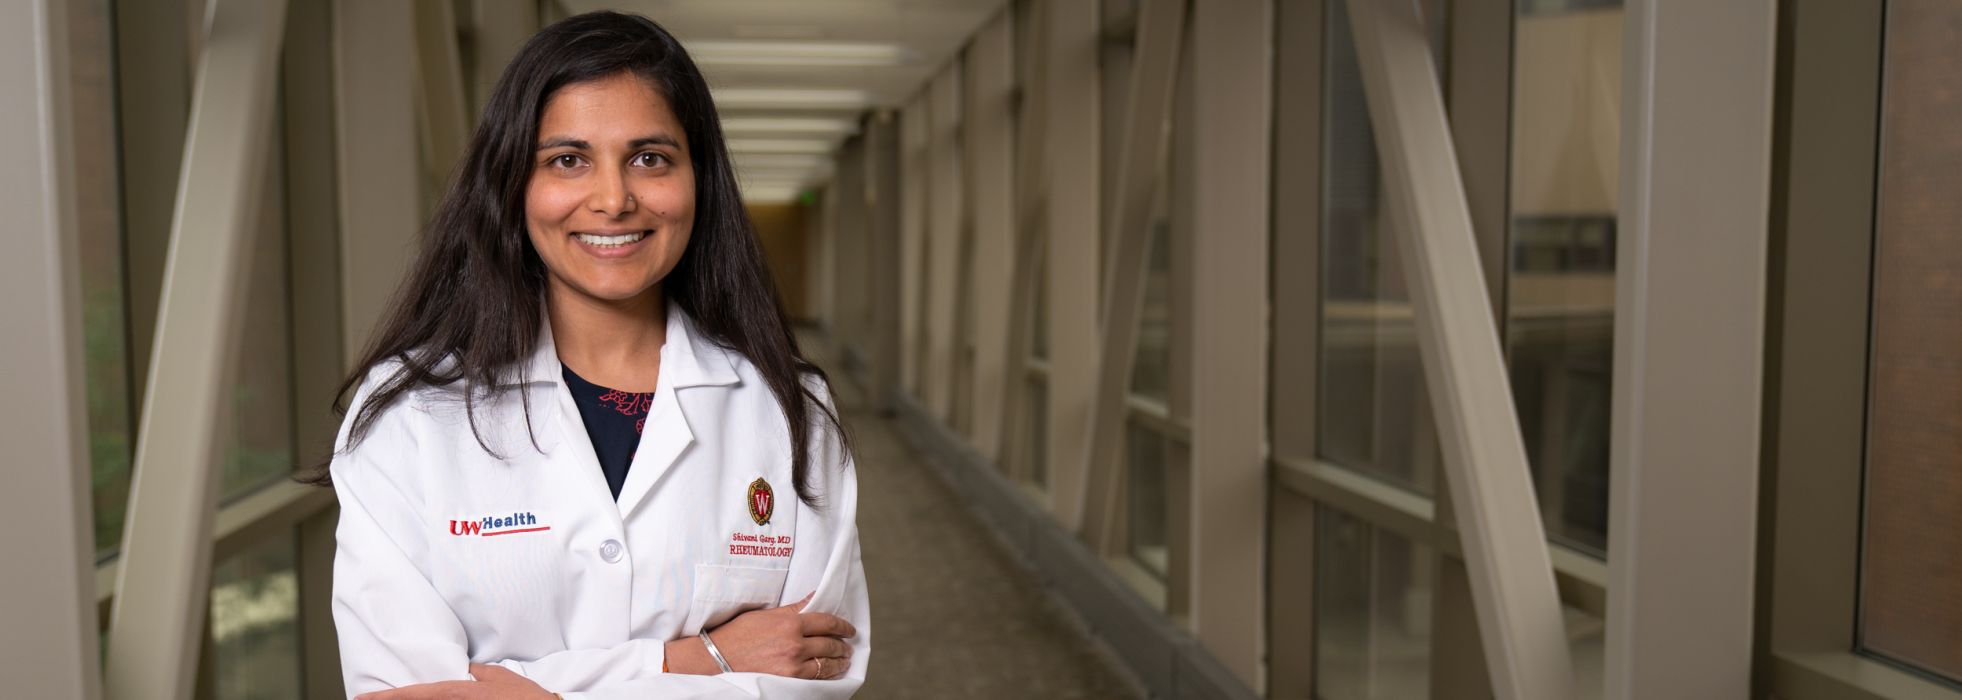 Dr. Shivani Garg in white coat